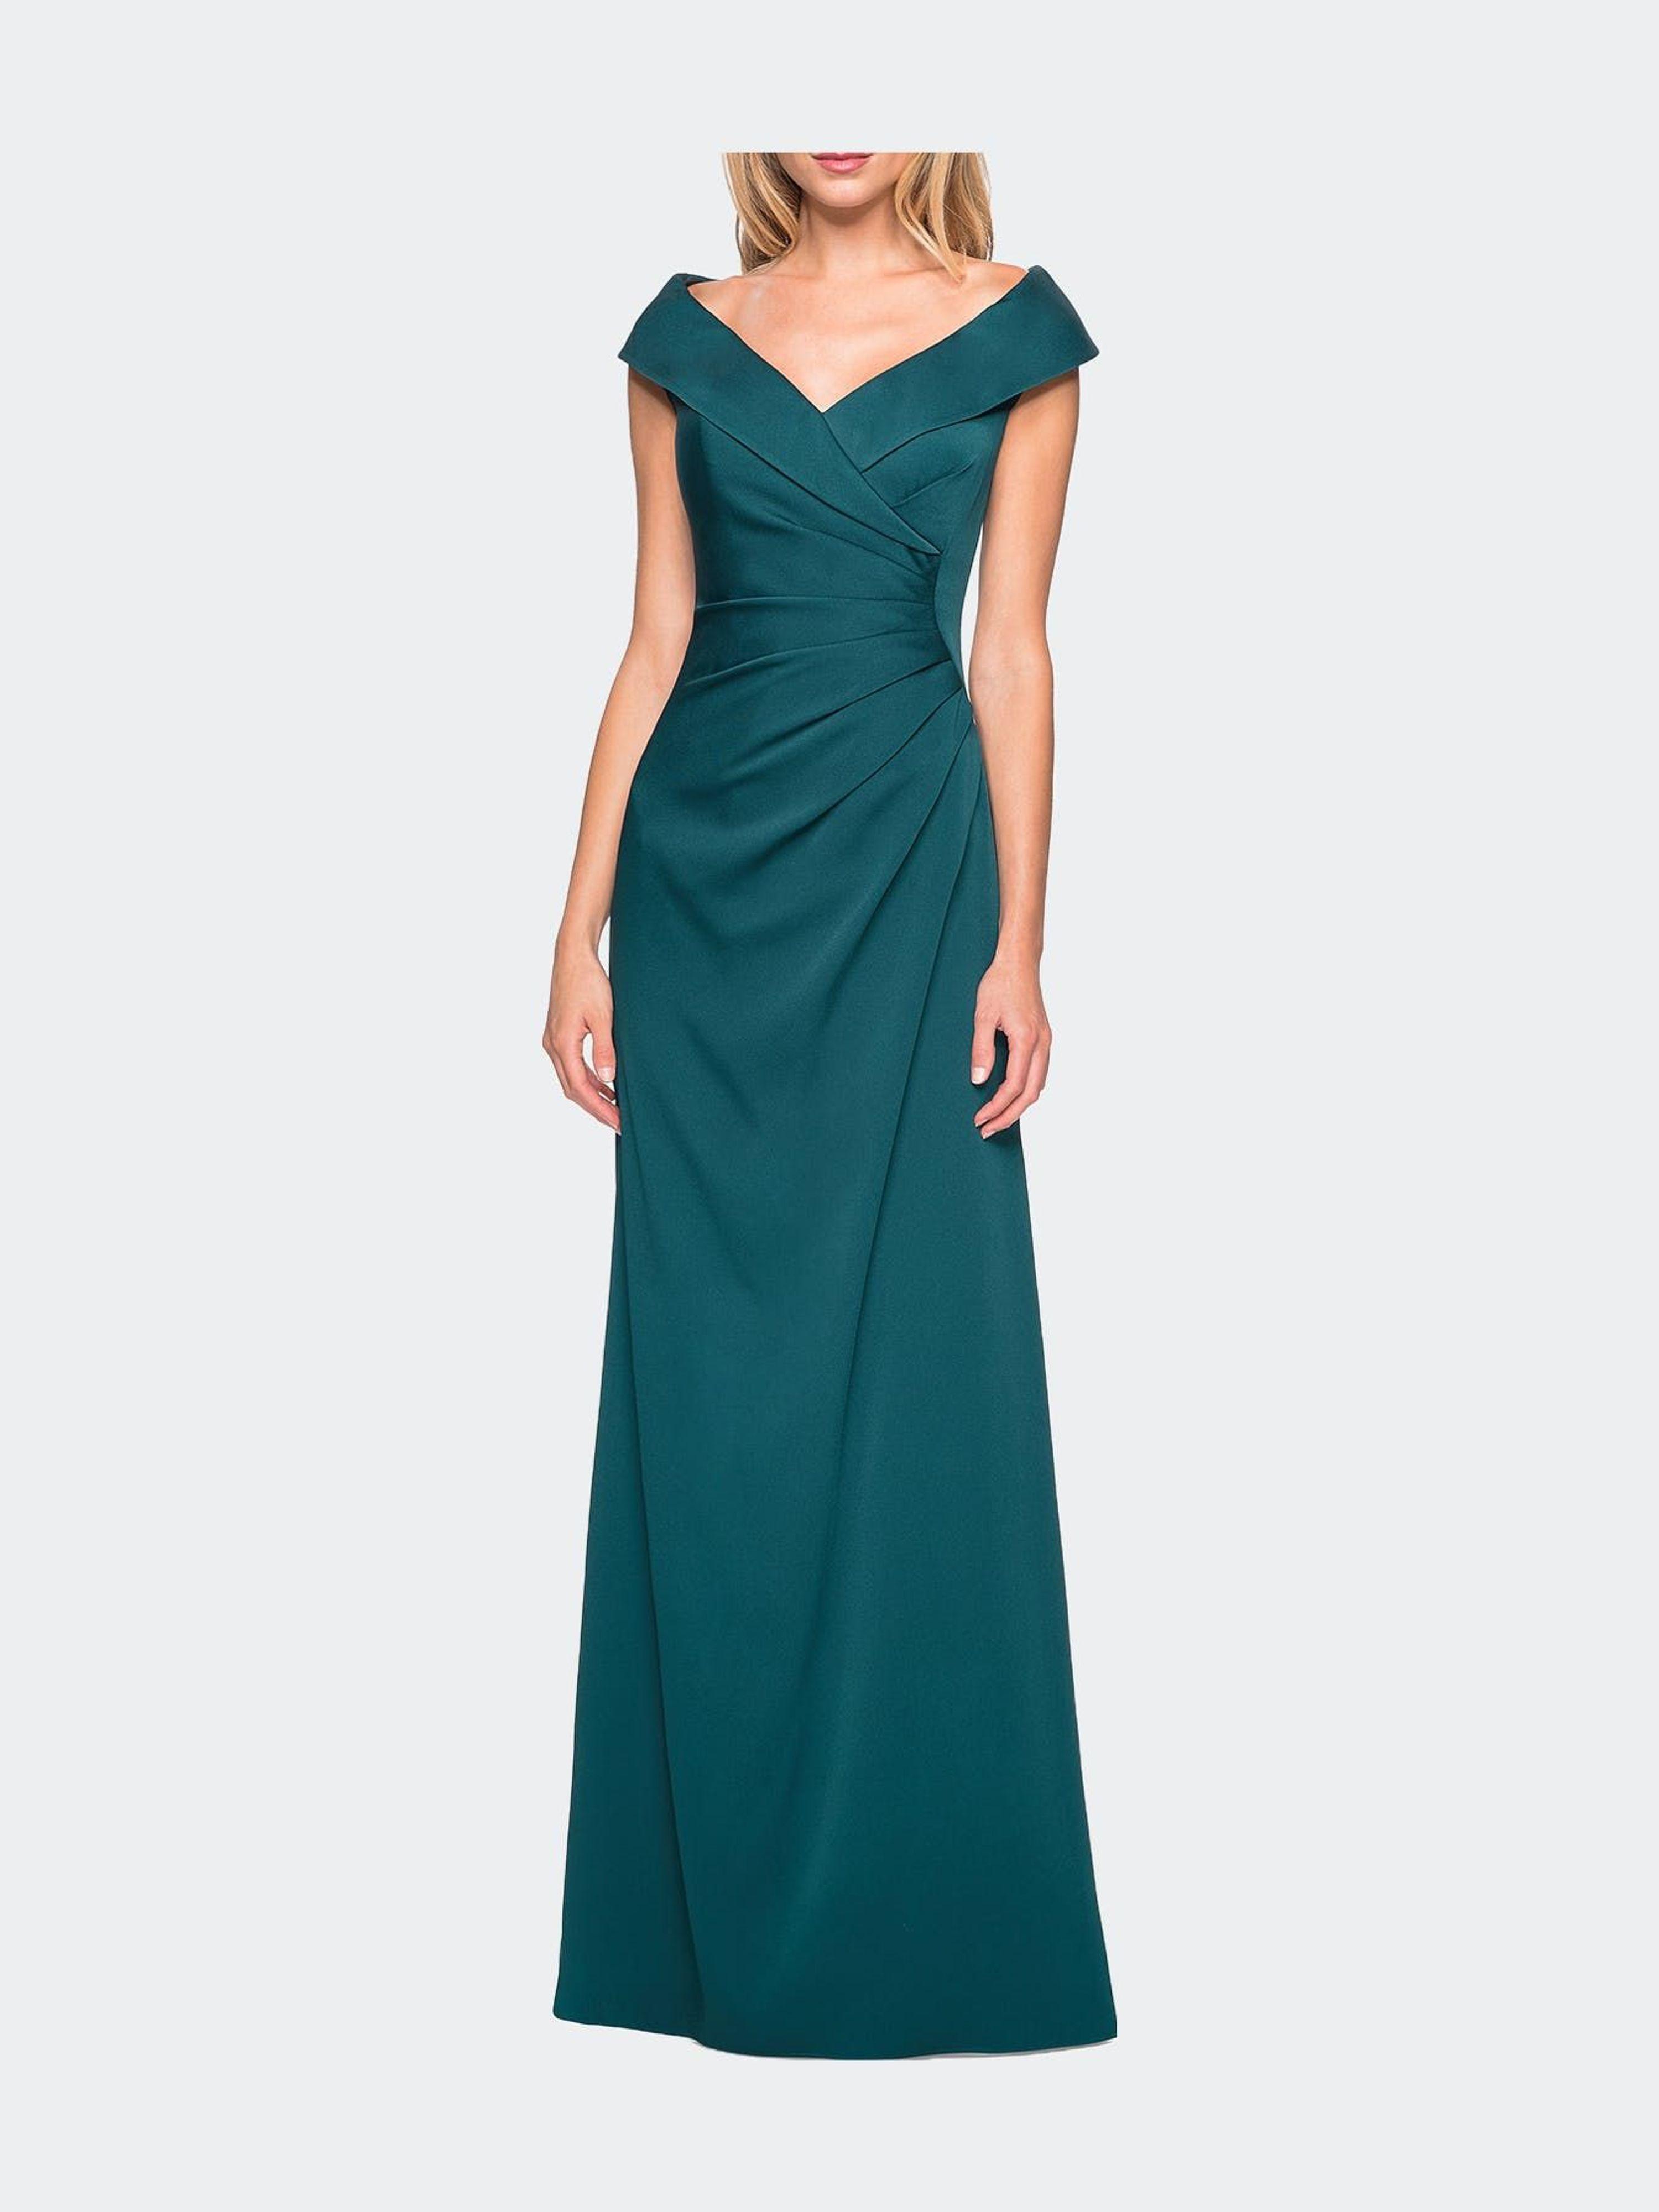 https://cdna.lystit.com/photos/verishop/2ad5e880/la-femme-Evergreen-Satin-Floor-Length-Gown-With-Ruched-Detailing.jpeg